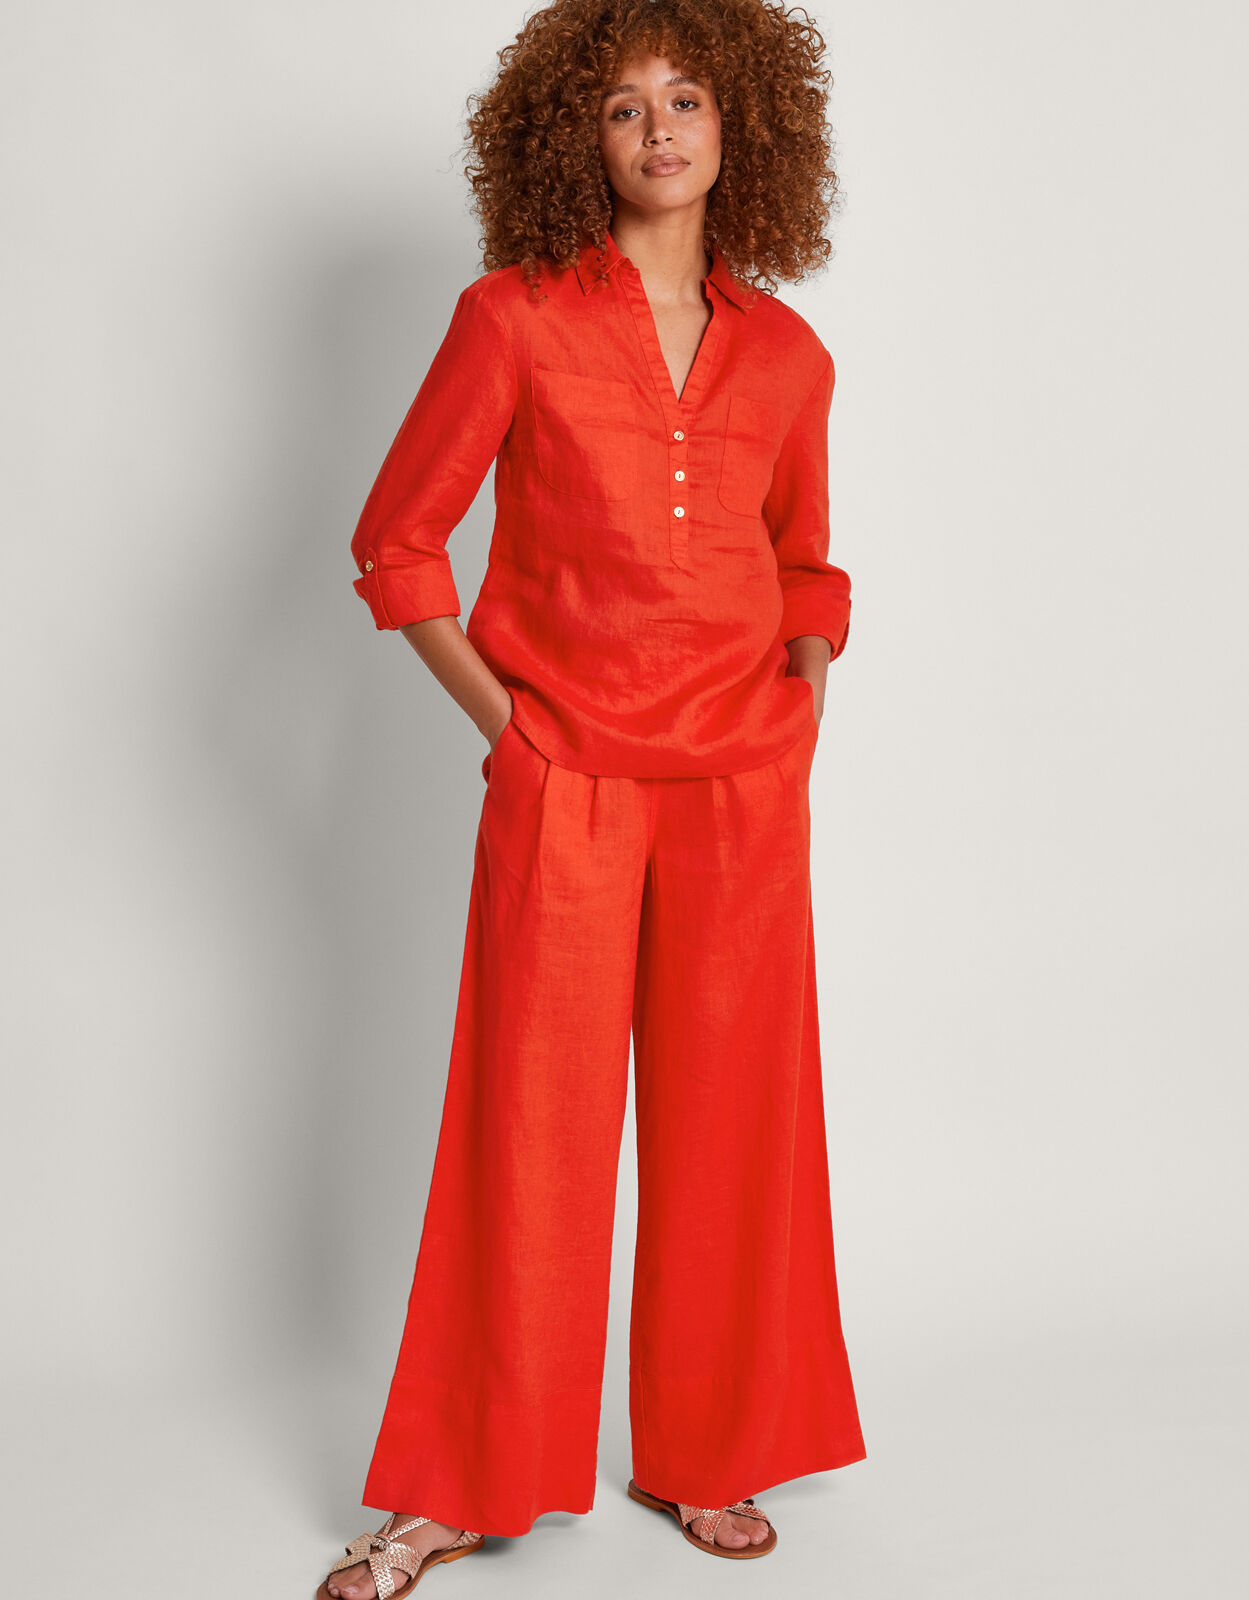 Red linen trousers | pants for women | capri trousers in 100% linen